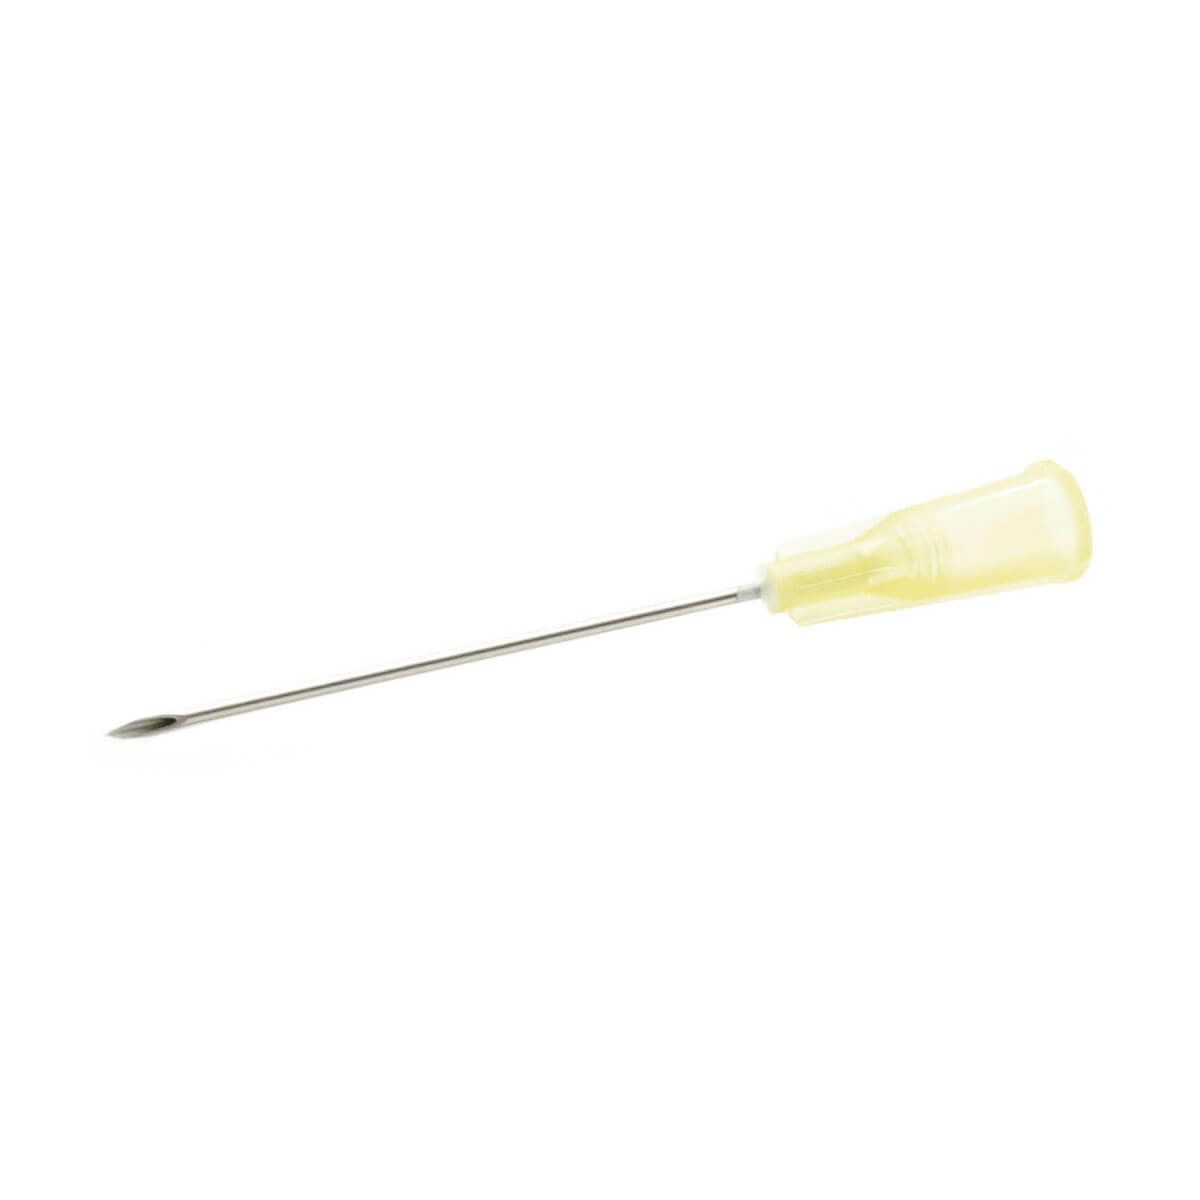 BD Microlance Needle Yellow 20G 40MM